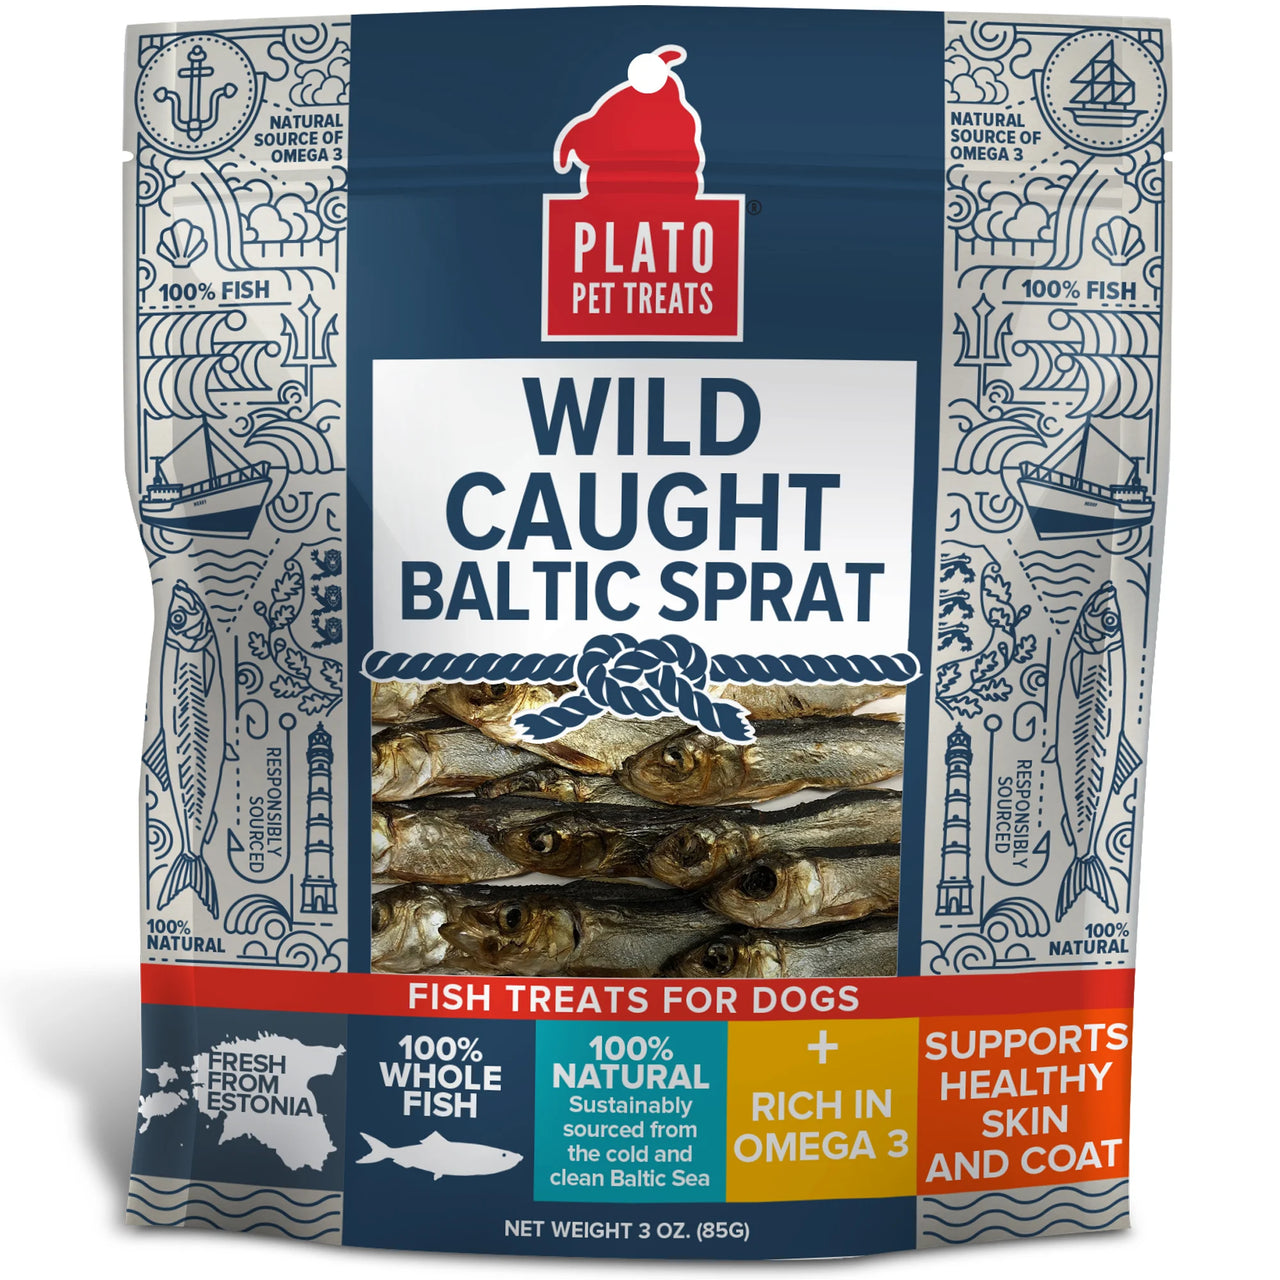 Plato Wild Caught Baltic Sprat, 3 oz.